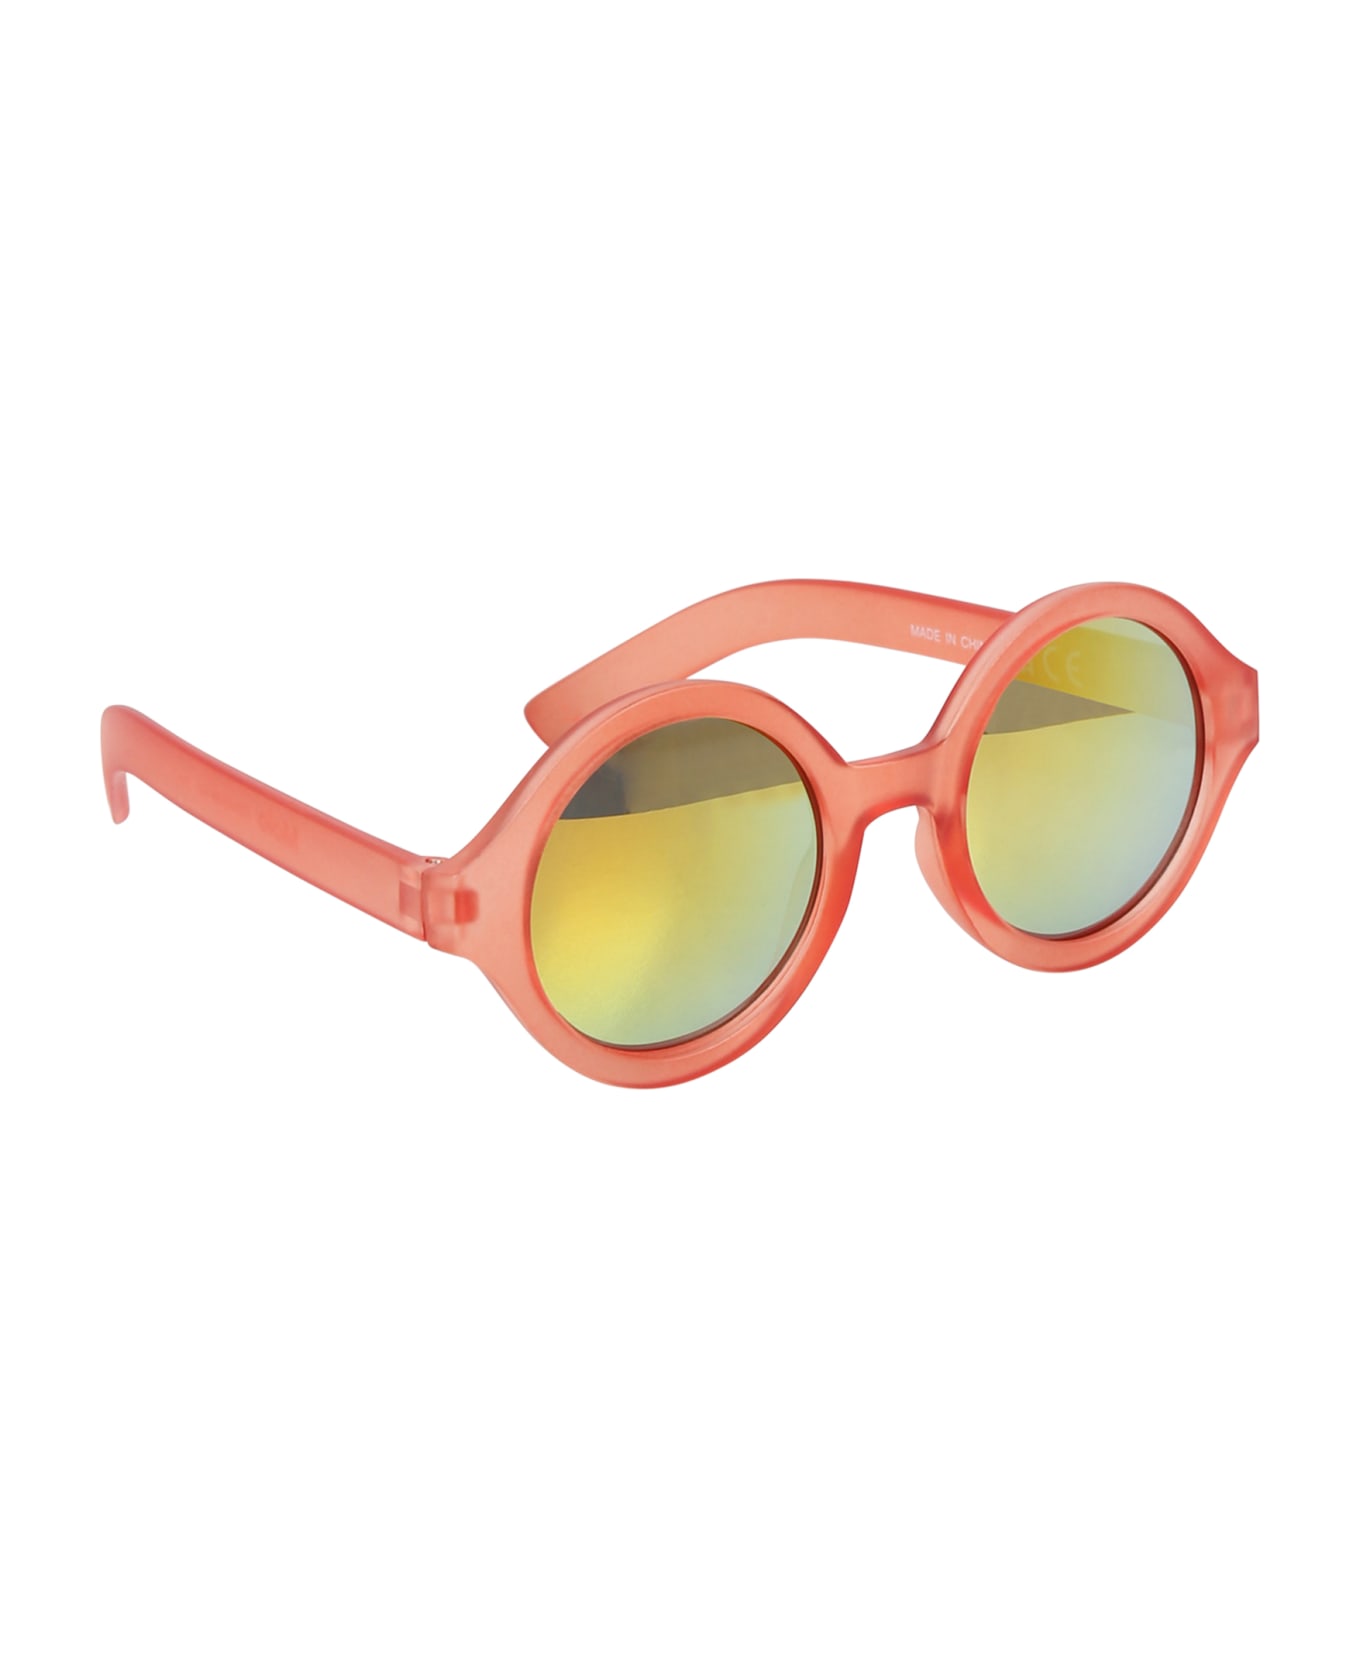 Molo Red Shelby Sunglasses For Girl - Fuchsia